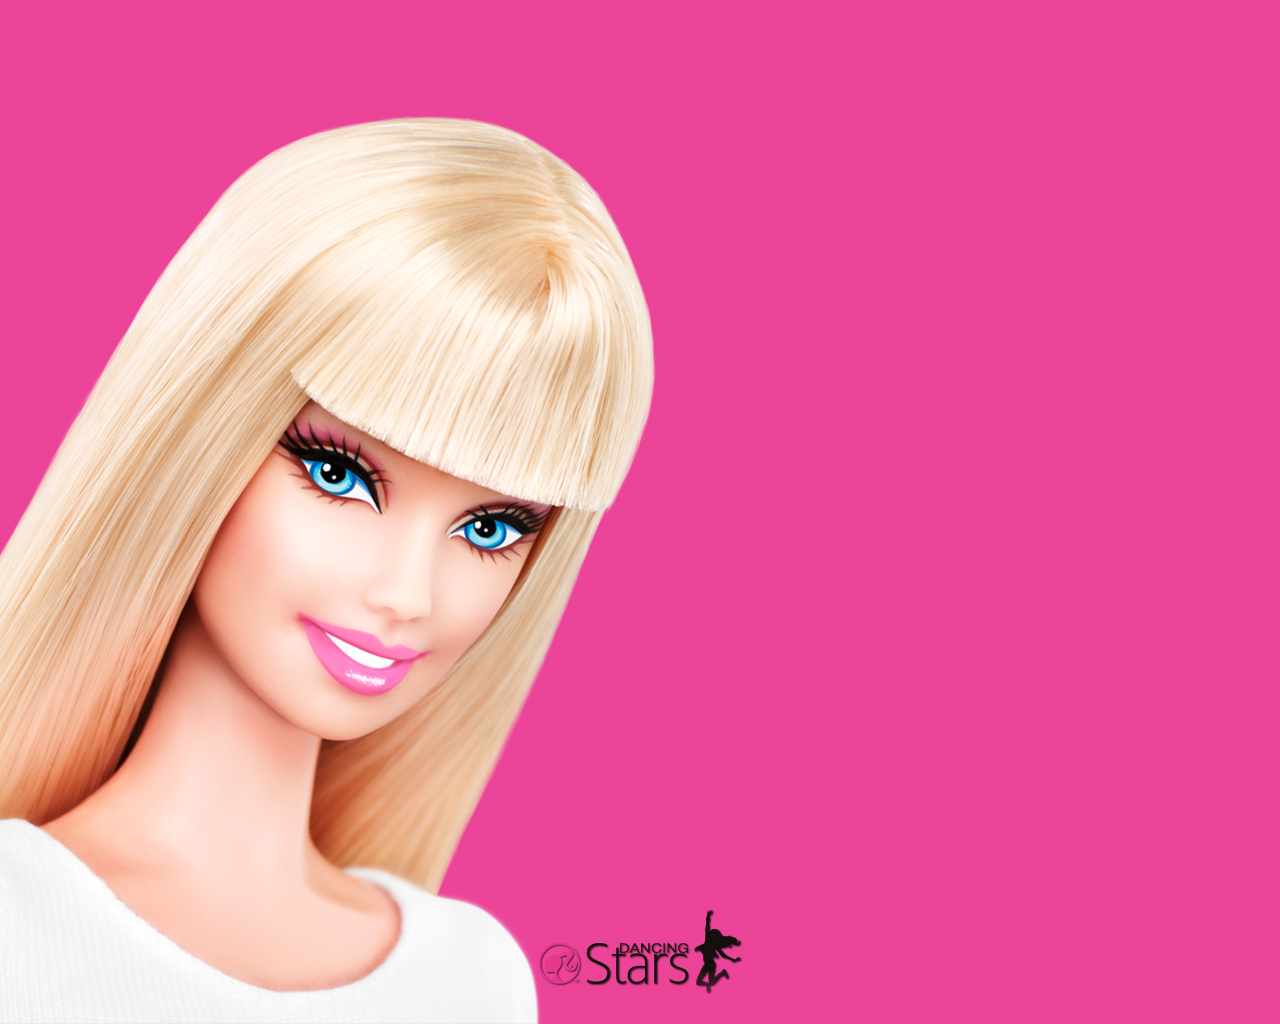 barbie wallpaper,haar,barbie,gesicht,blond,rosa